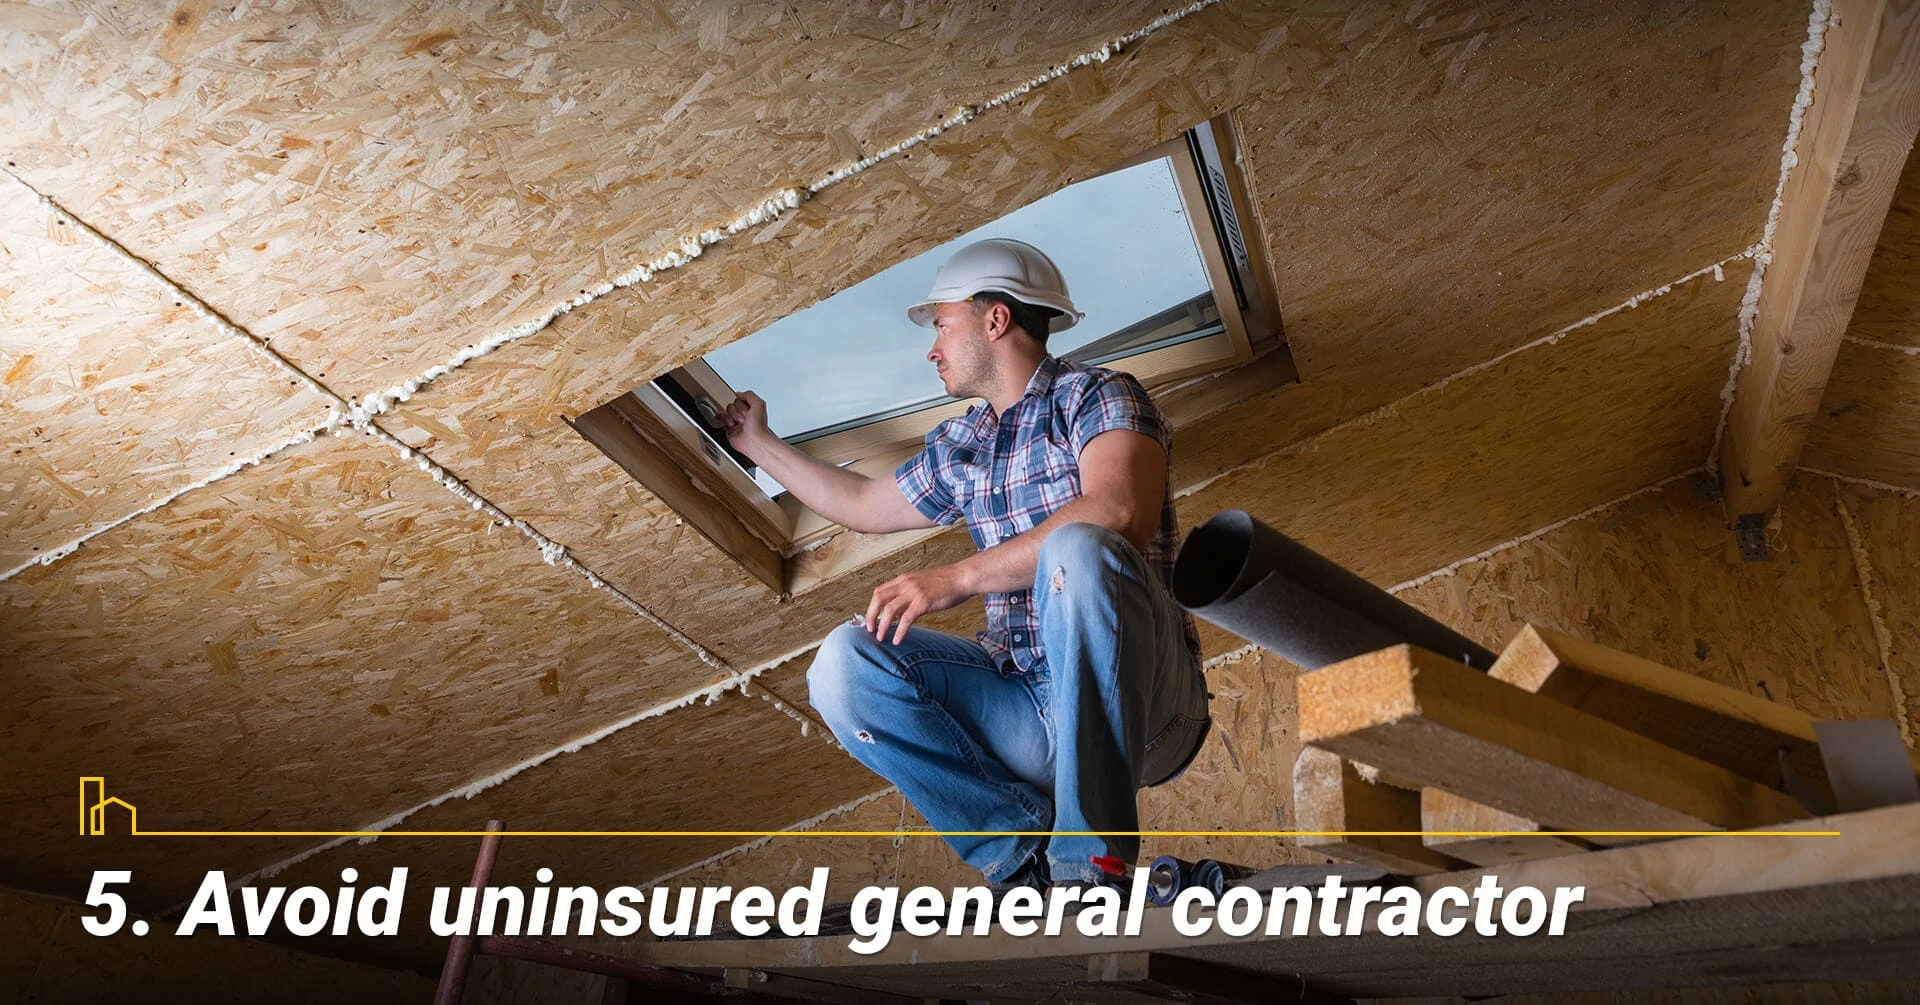 Avoid uninsured general contractor, ensure the general contractor is insured